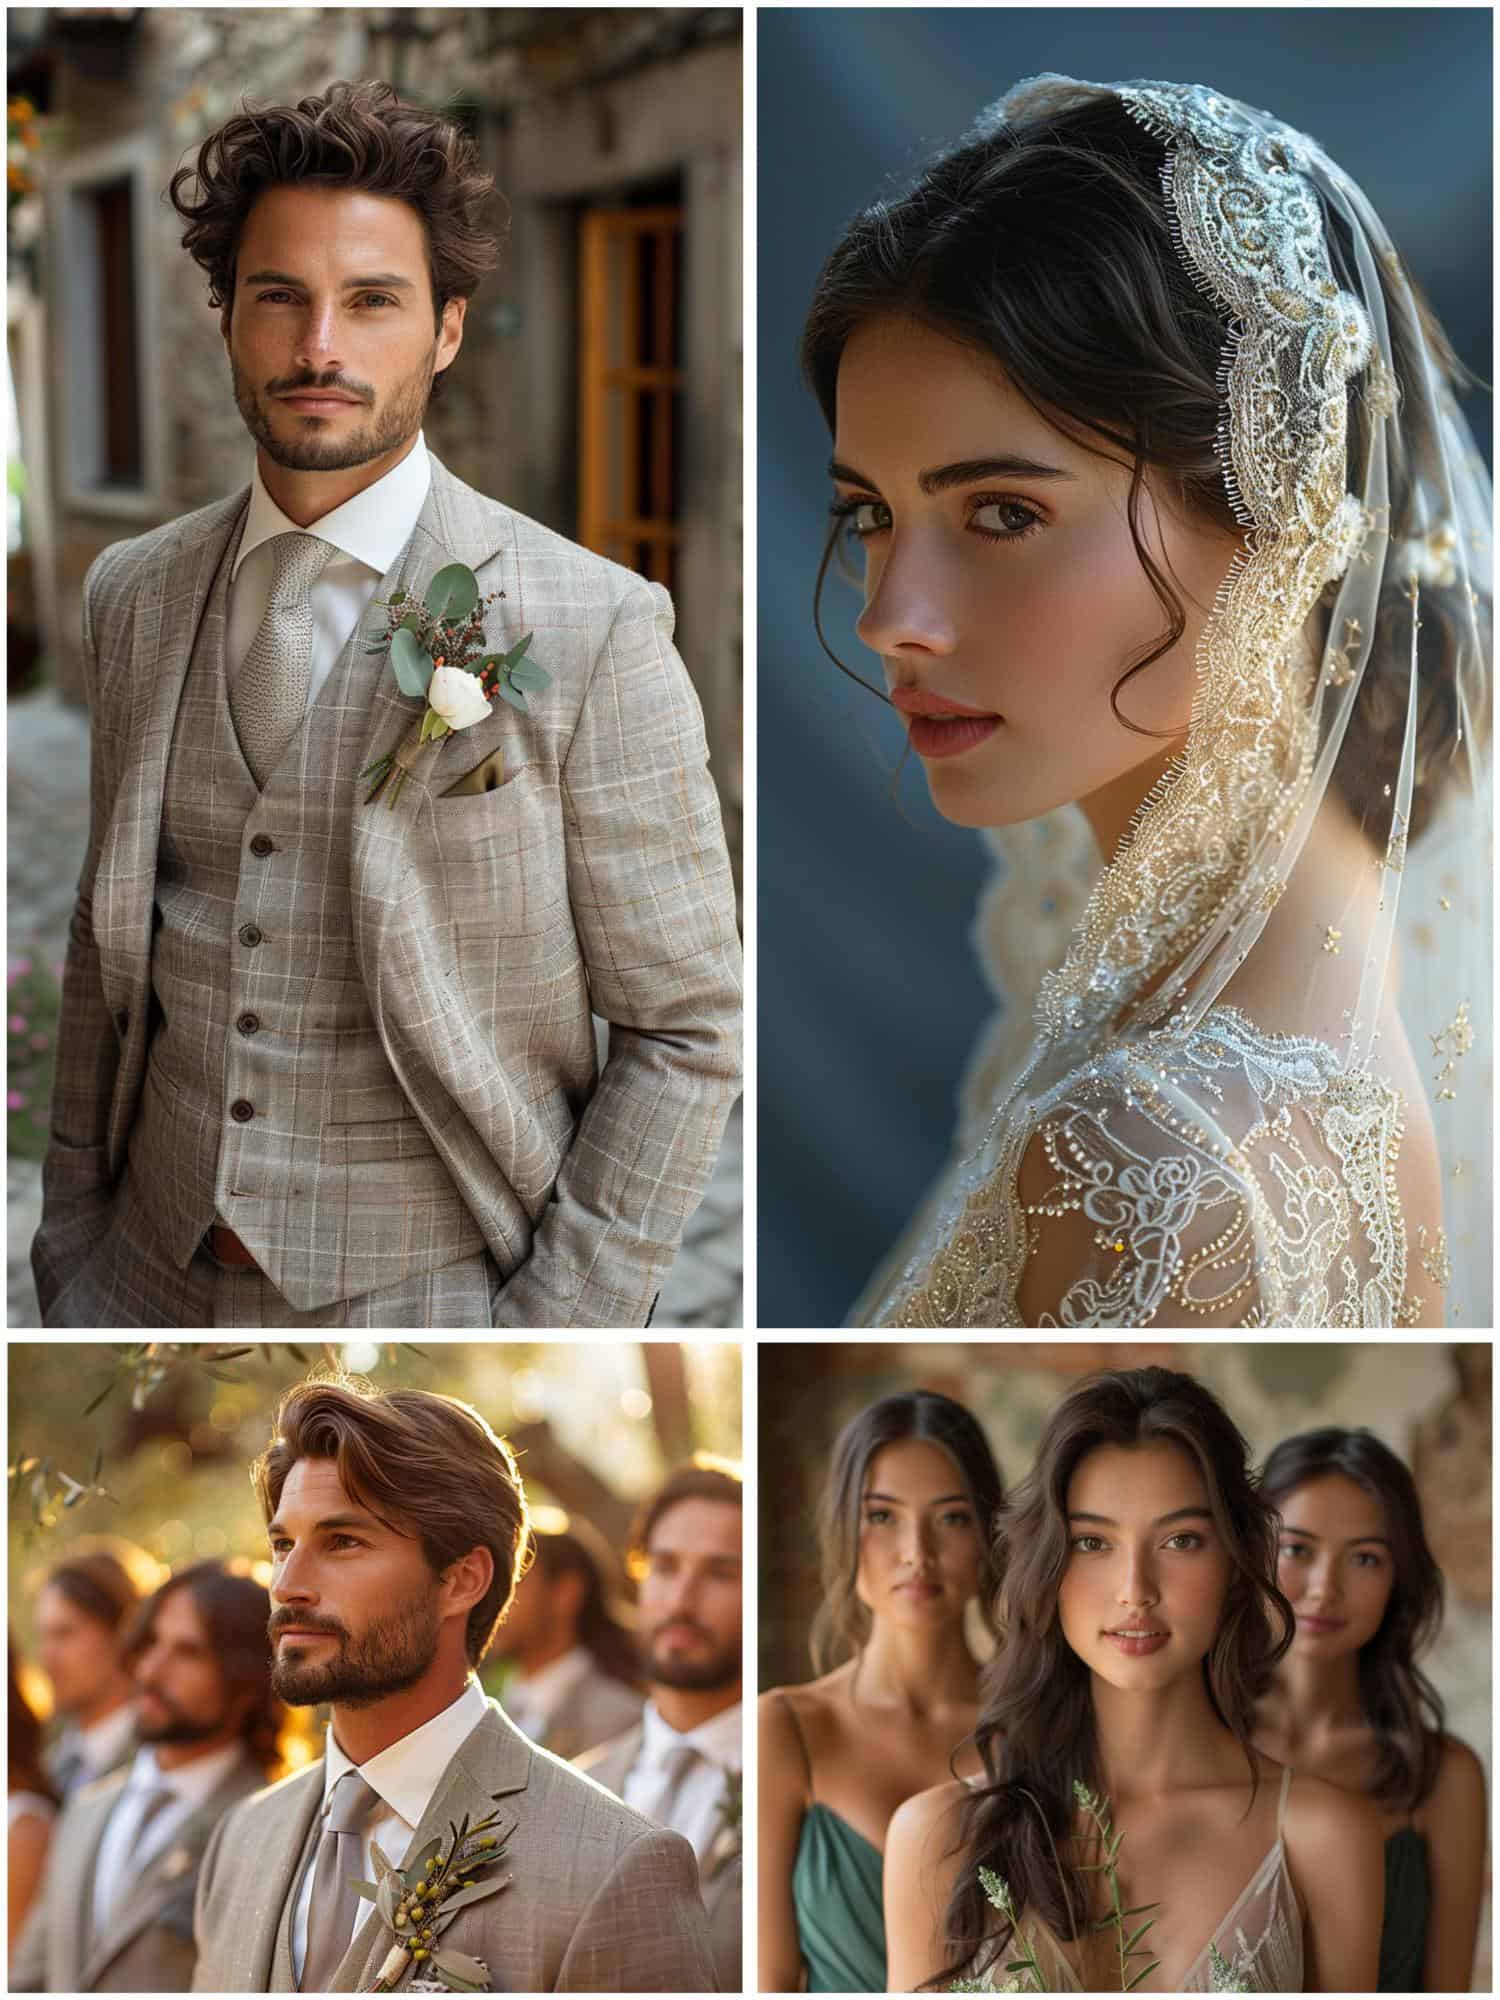 italian wedding theme ideas for attire